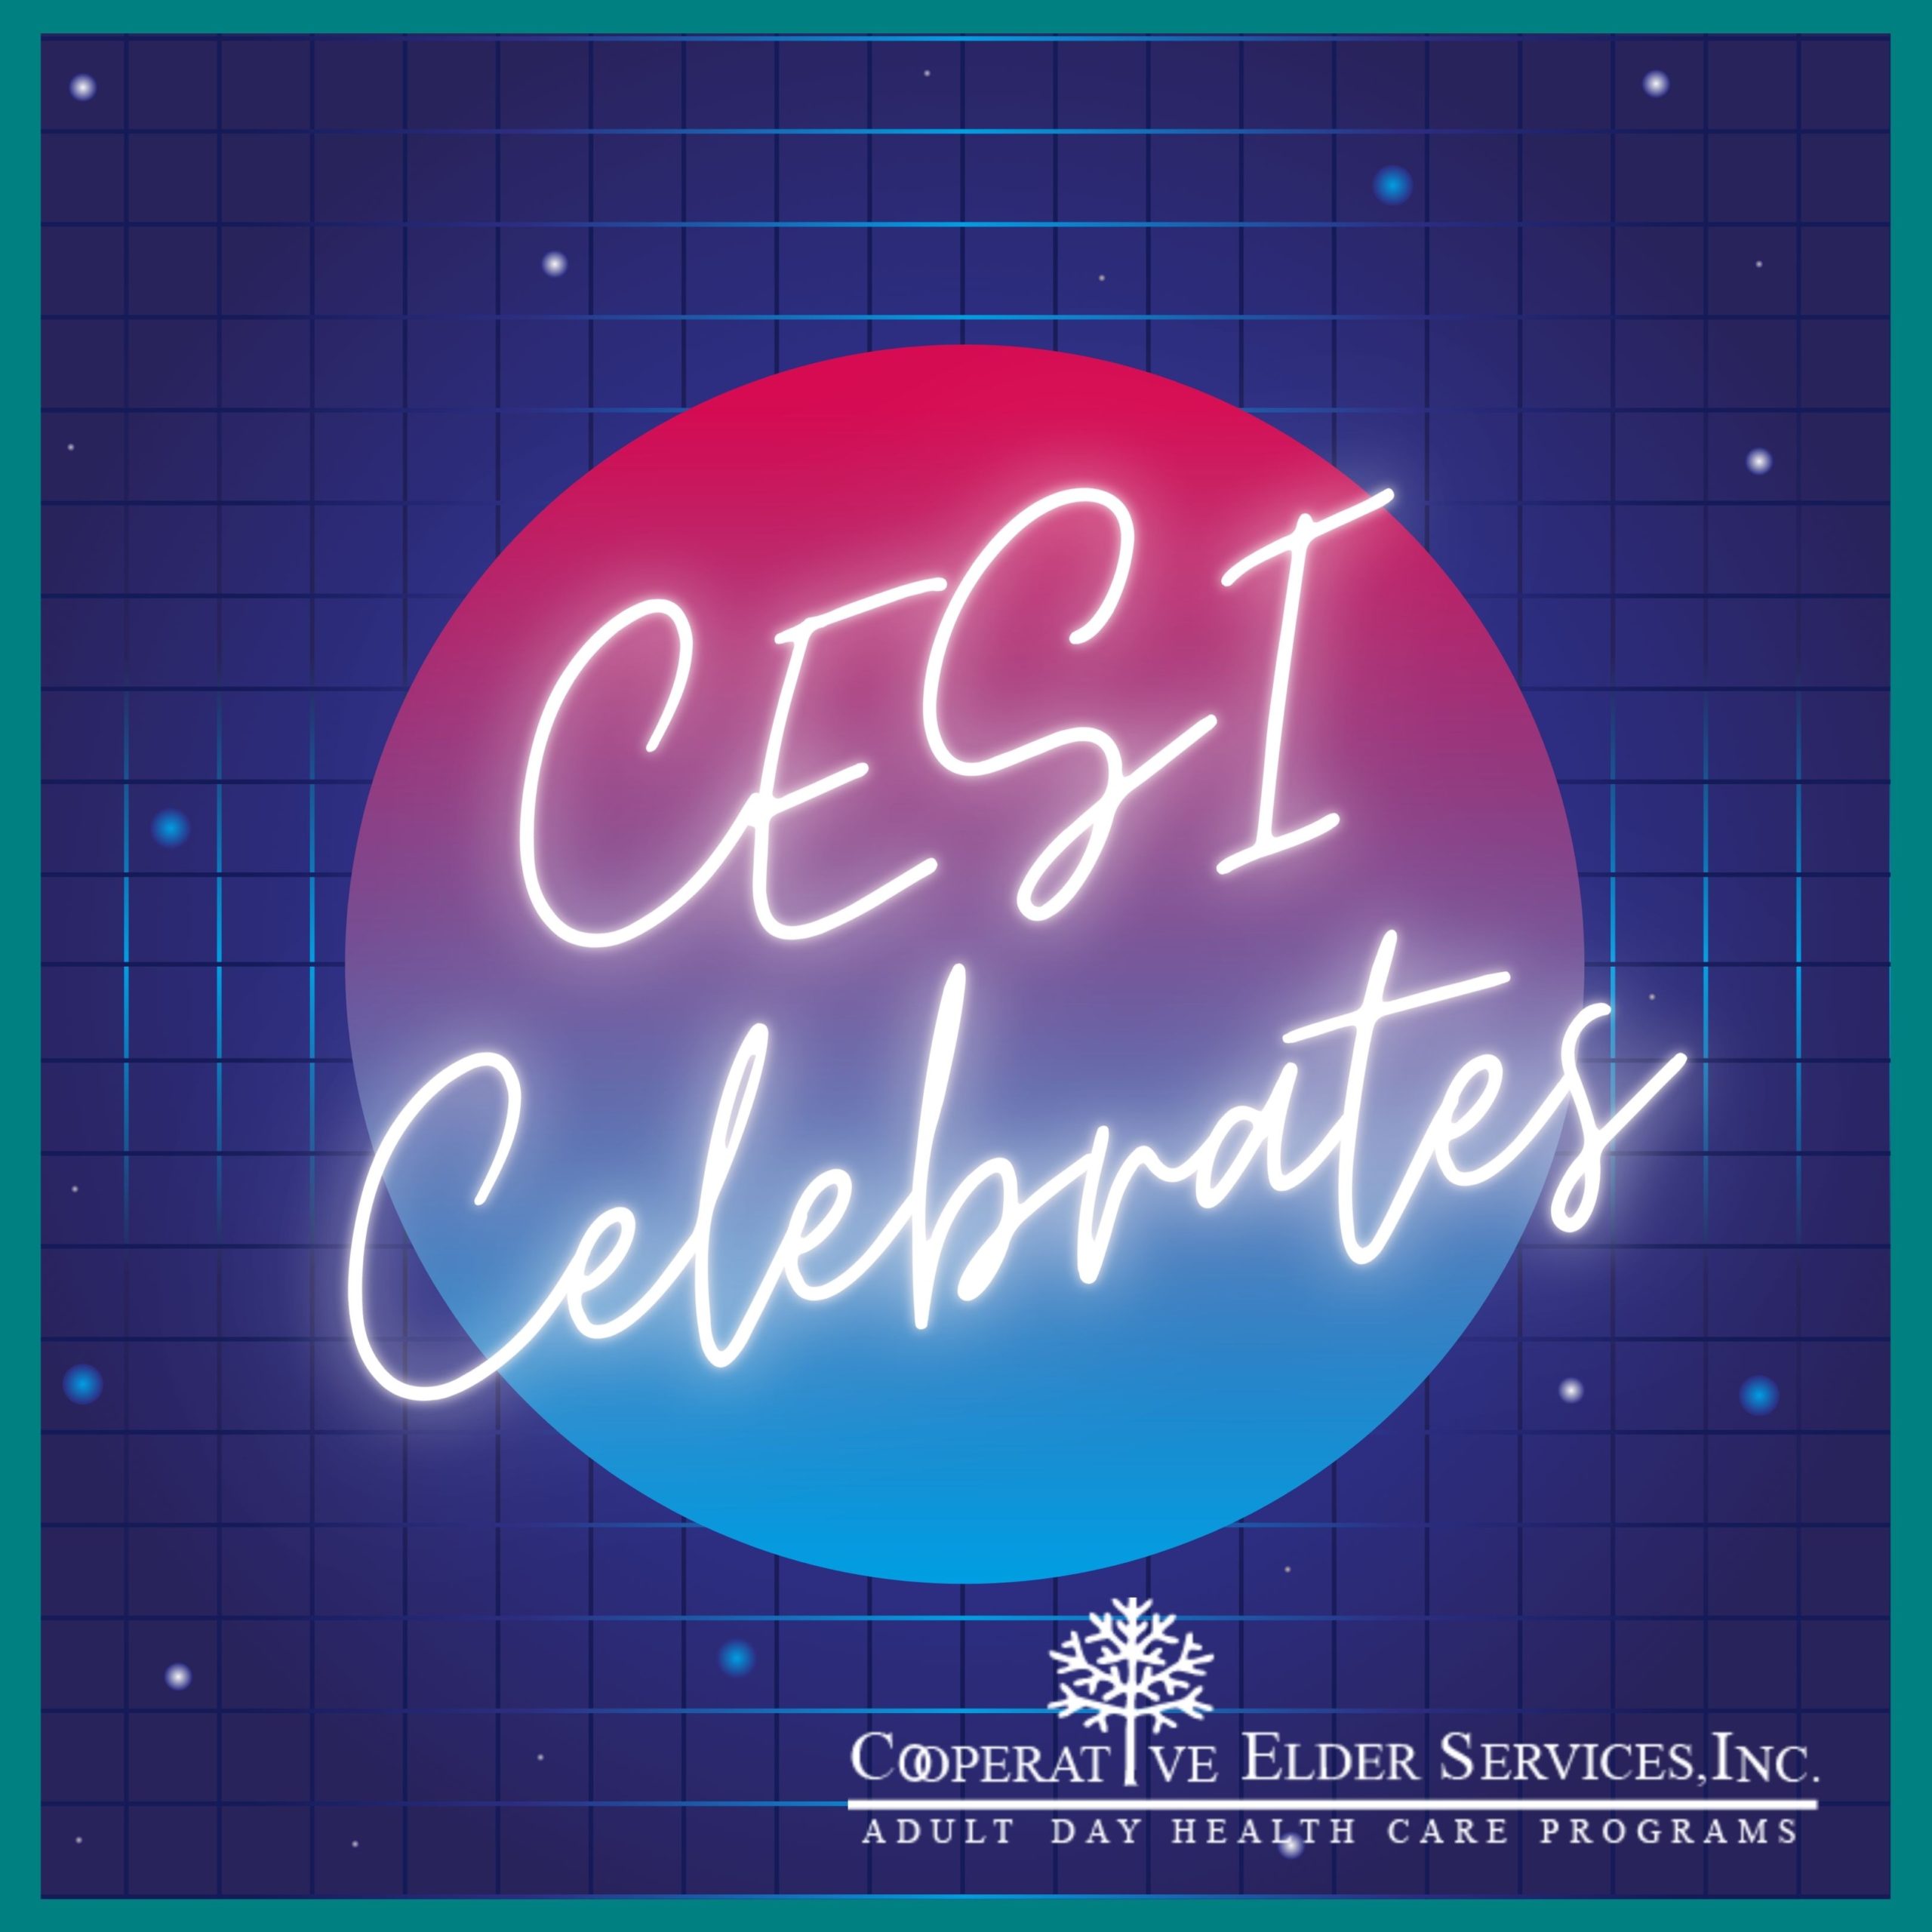 CESI Celebrates Logo